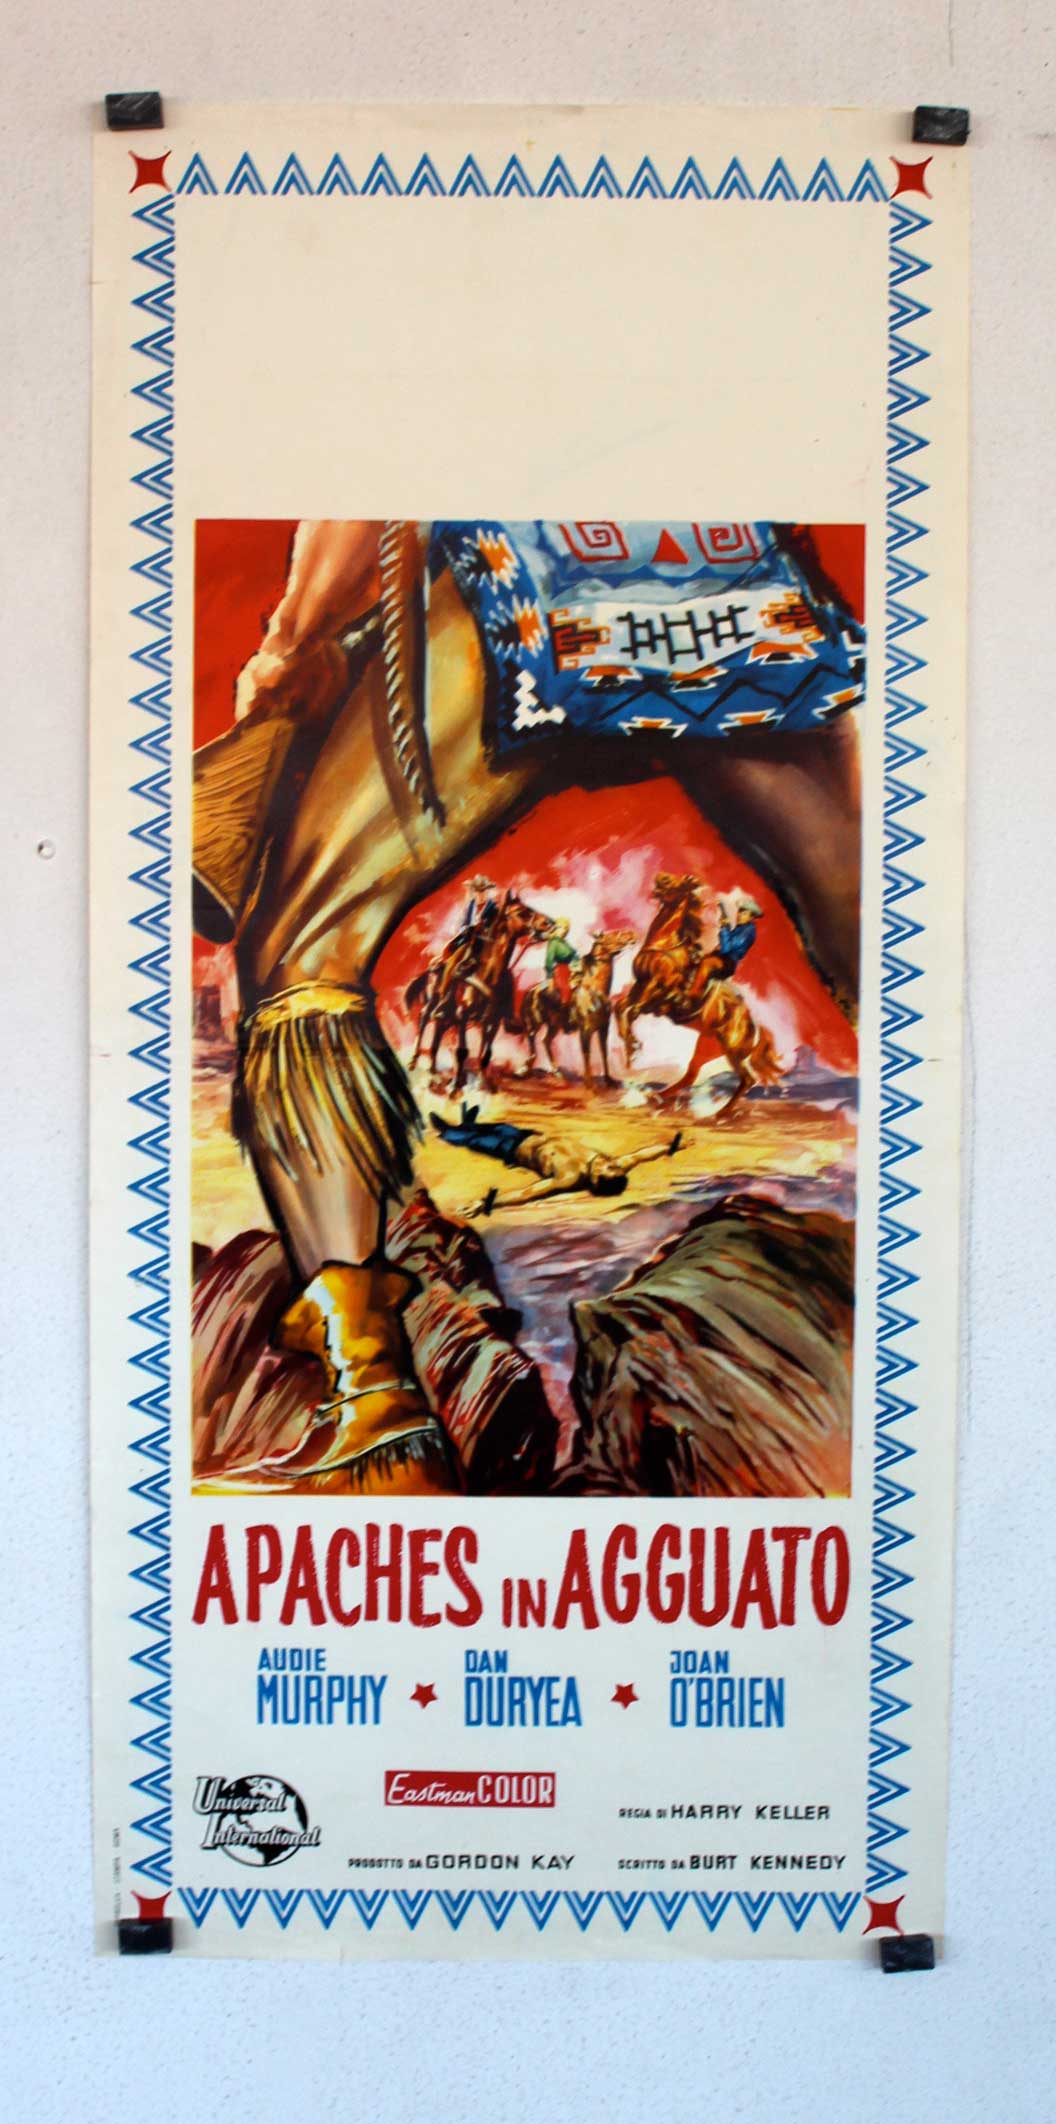 APACHES IN AGGUATO